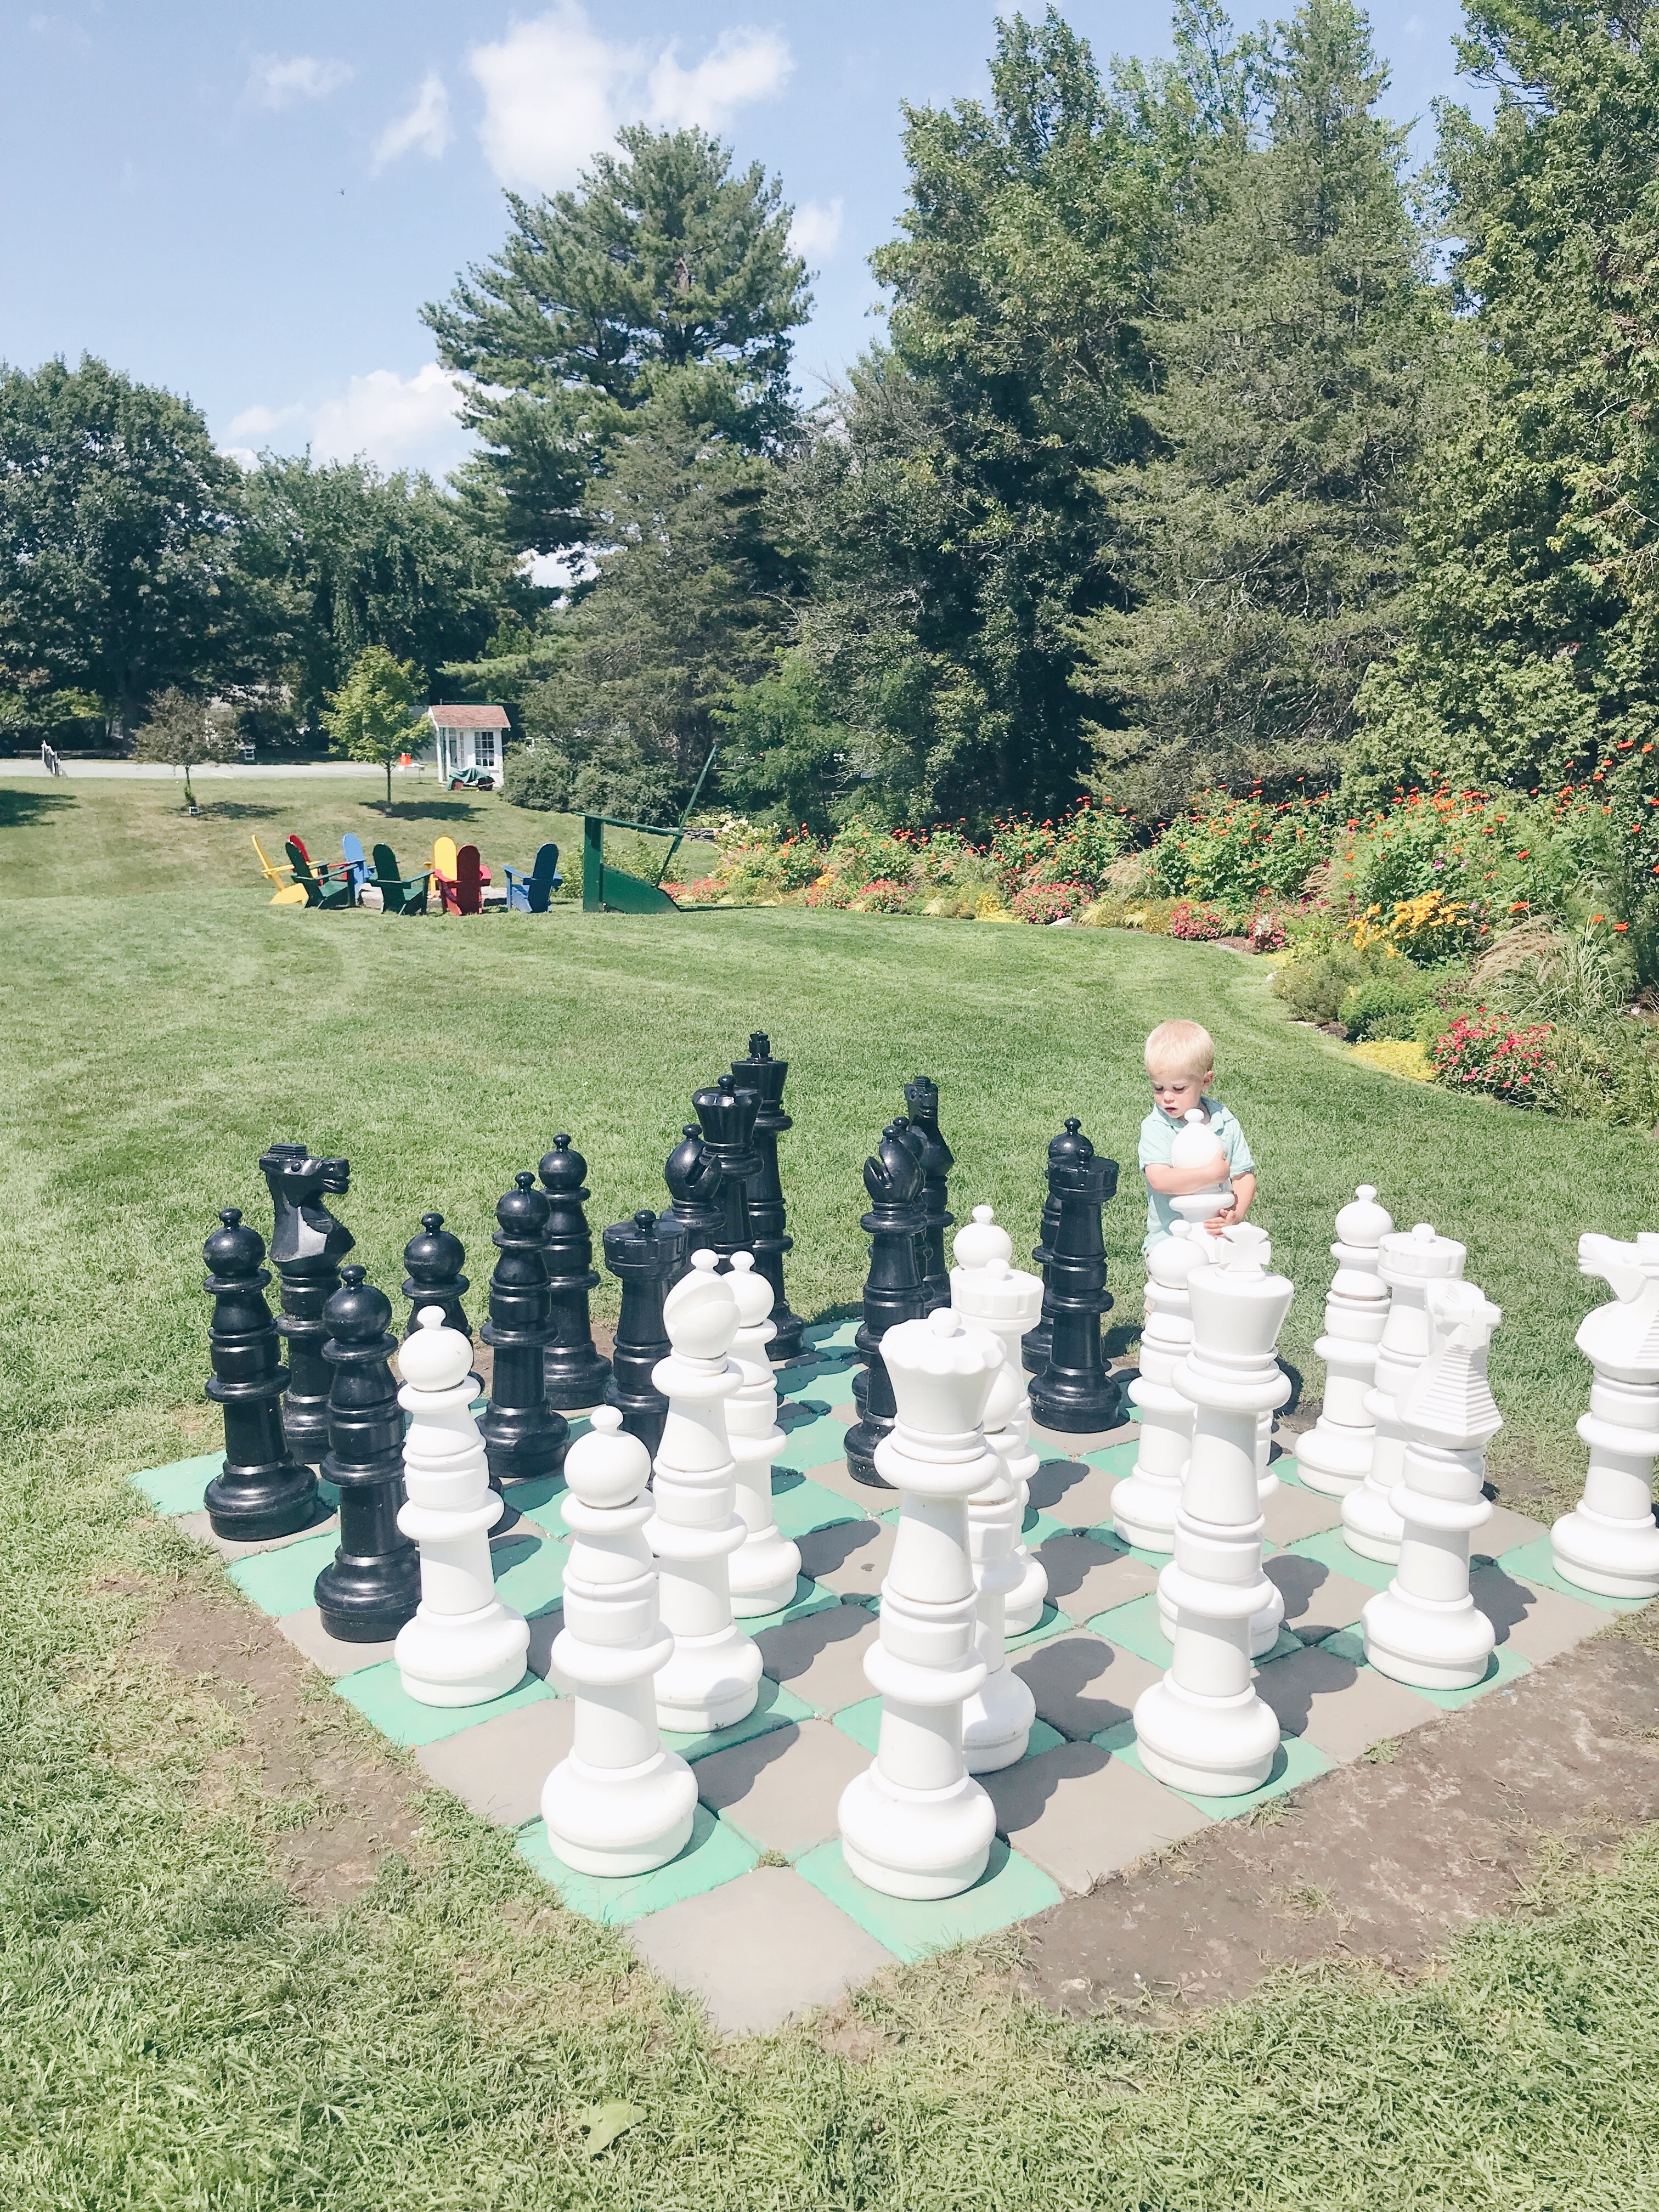 Basin Harbor Resort Review - Oversized Outdoor Chess